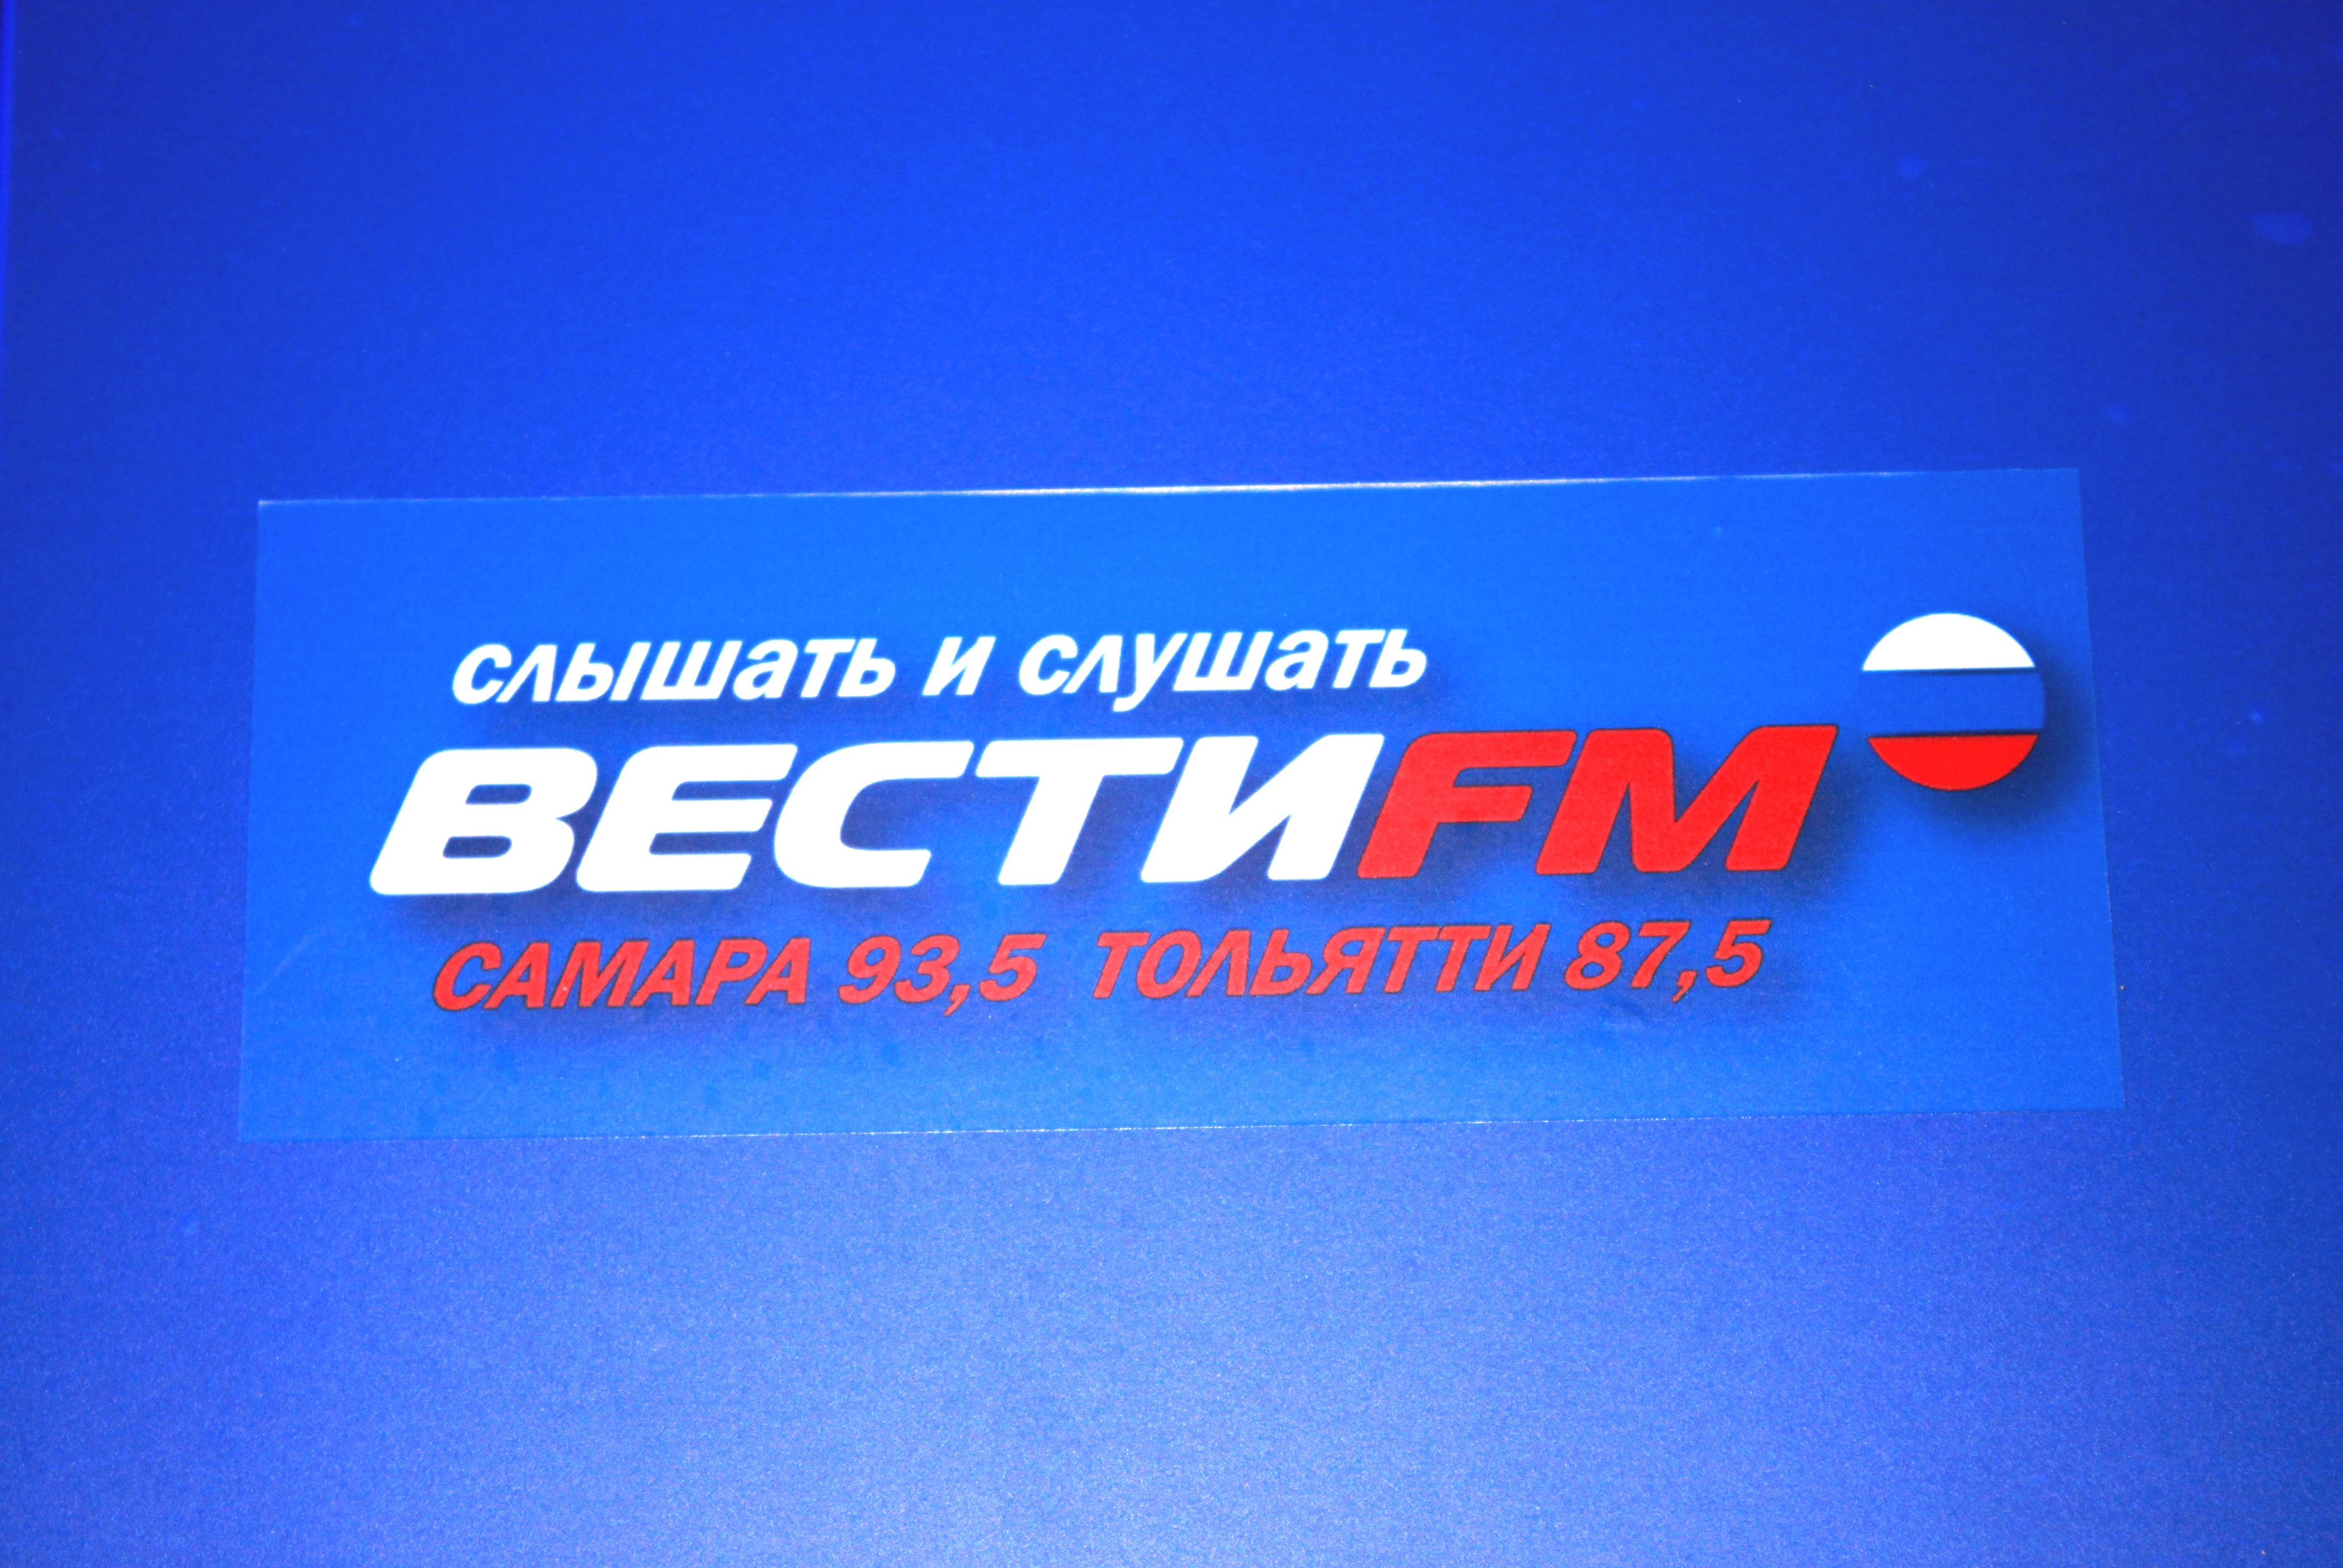 Dtcnb av. Вести ФМ. Вести fm логотип. Логотип радиостанции вести ФМ. Вести ФМ студия.